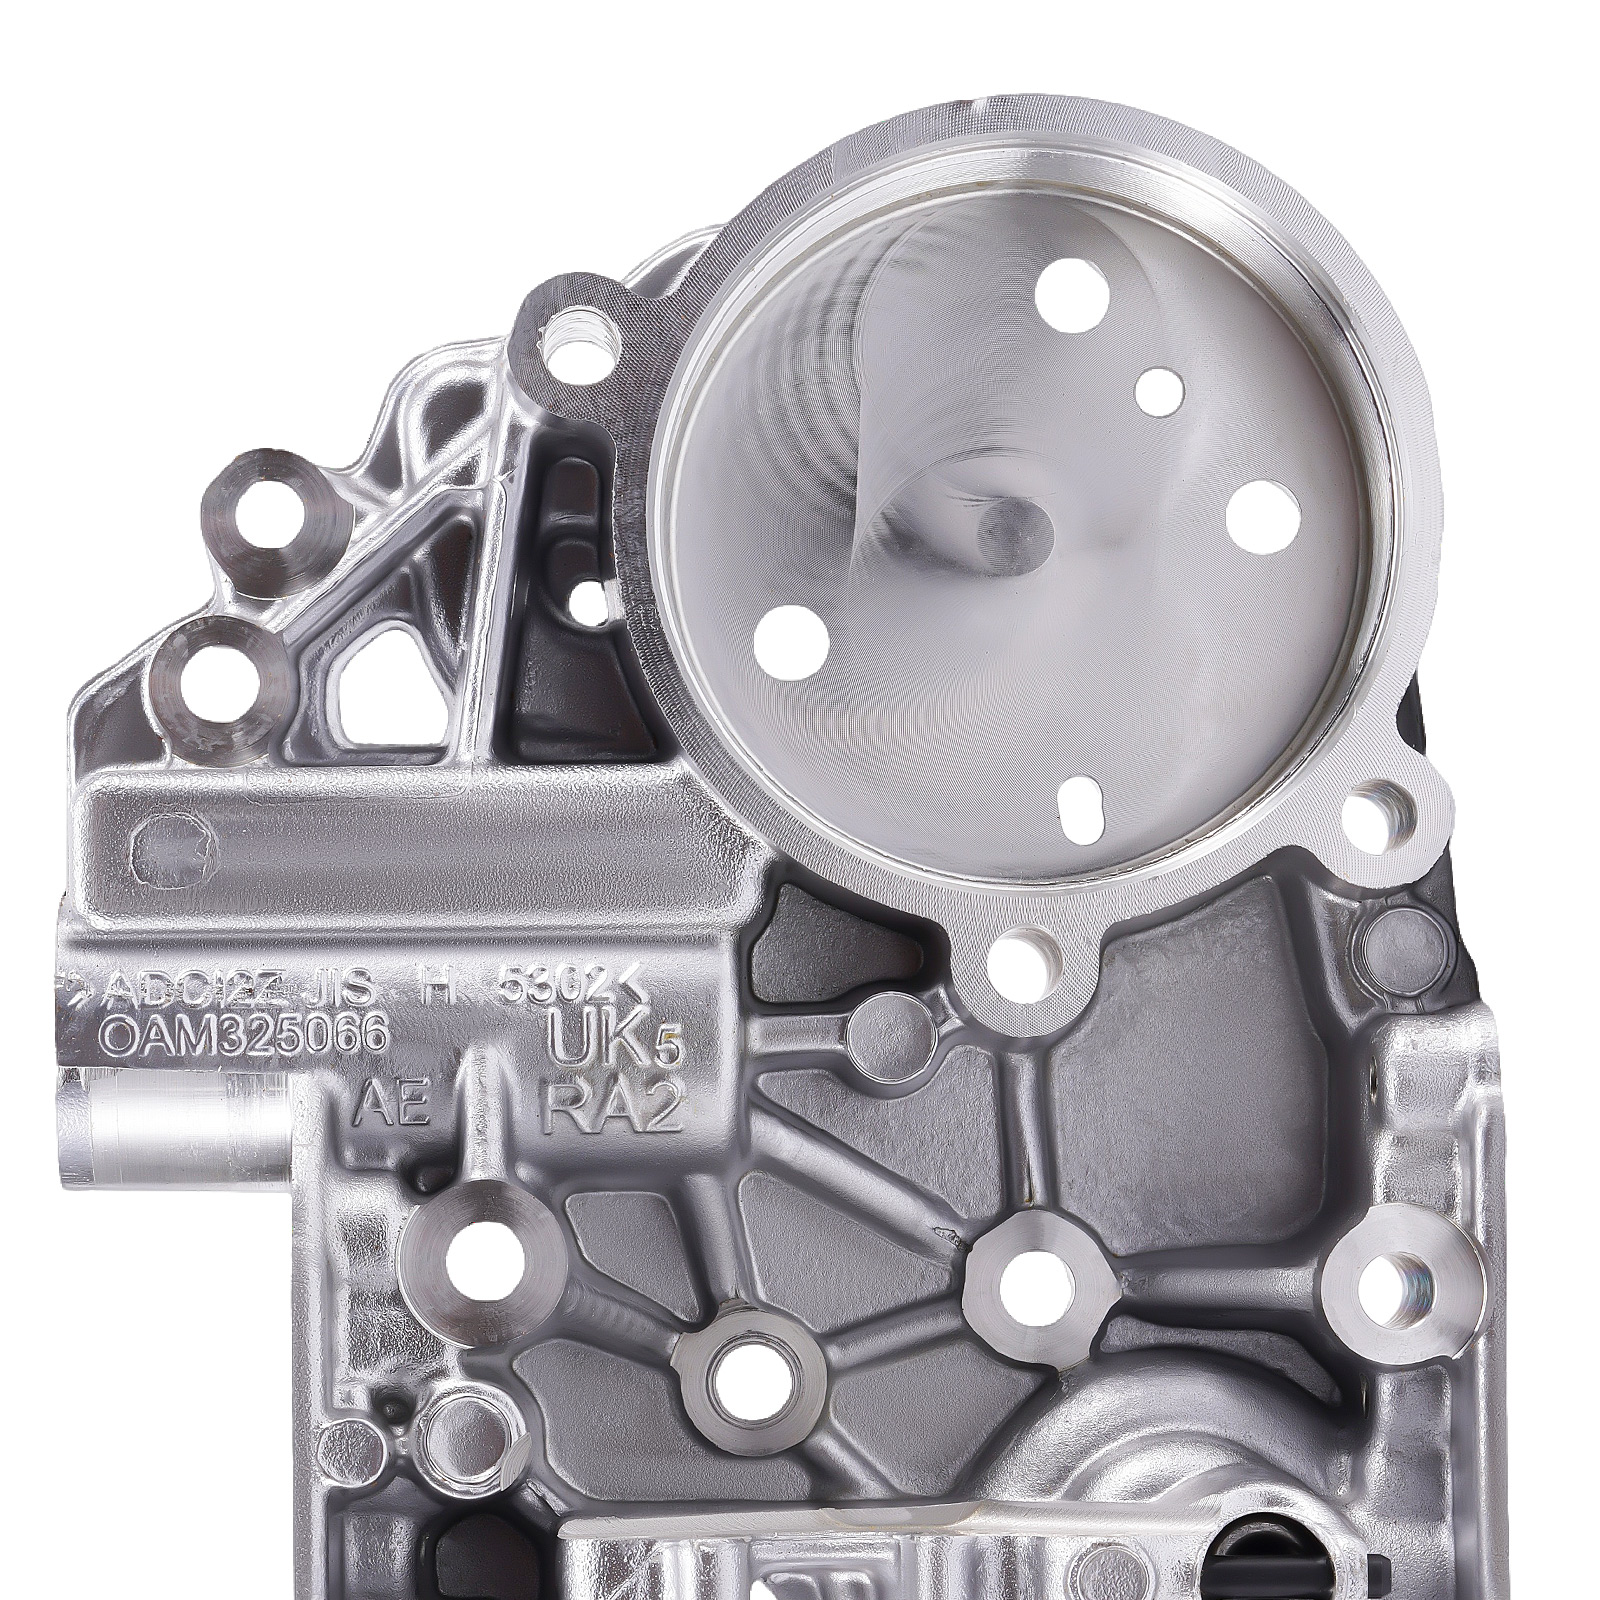 Mechatronik Getriebe Ventilkörper Speichergehäuse for VW DSG DQ200 7-Gang 0AM